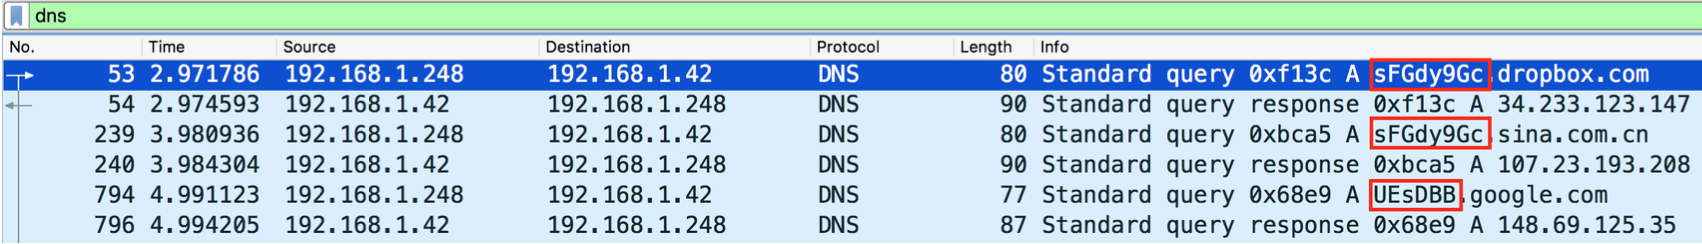 Anomalous DNS Traffic